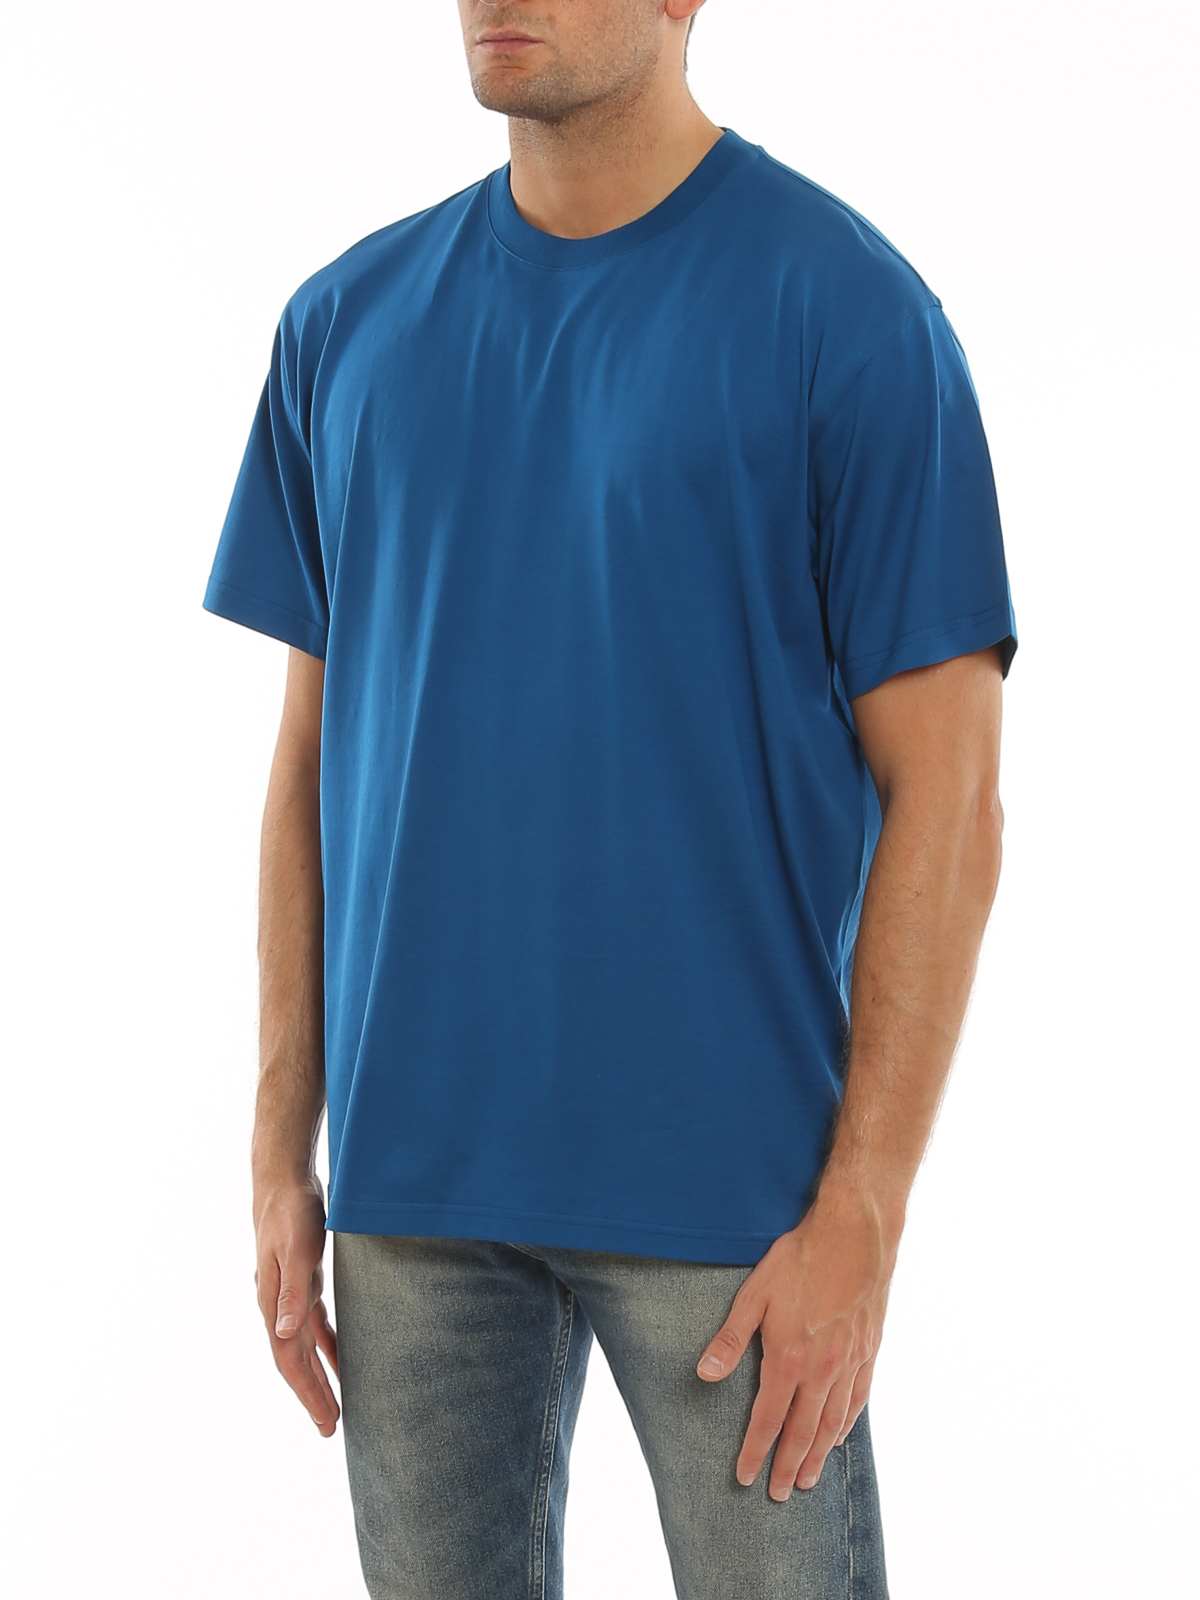 T-shirts Burberry - Cohen T-shirt - 8045547 | Shop online at iKRIX